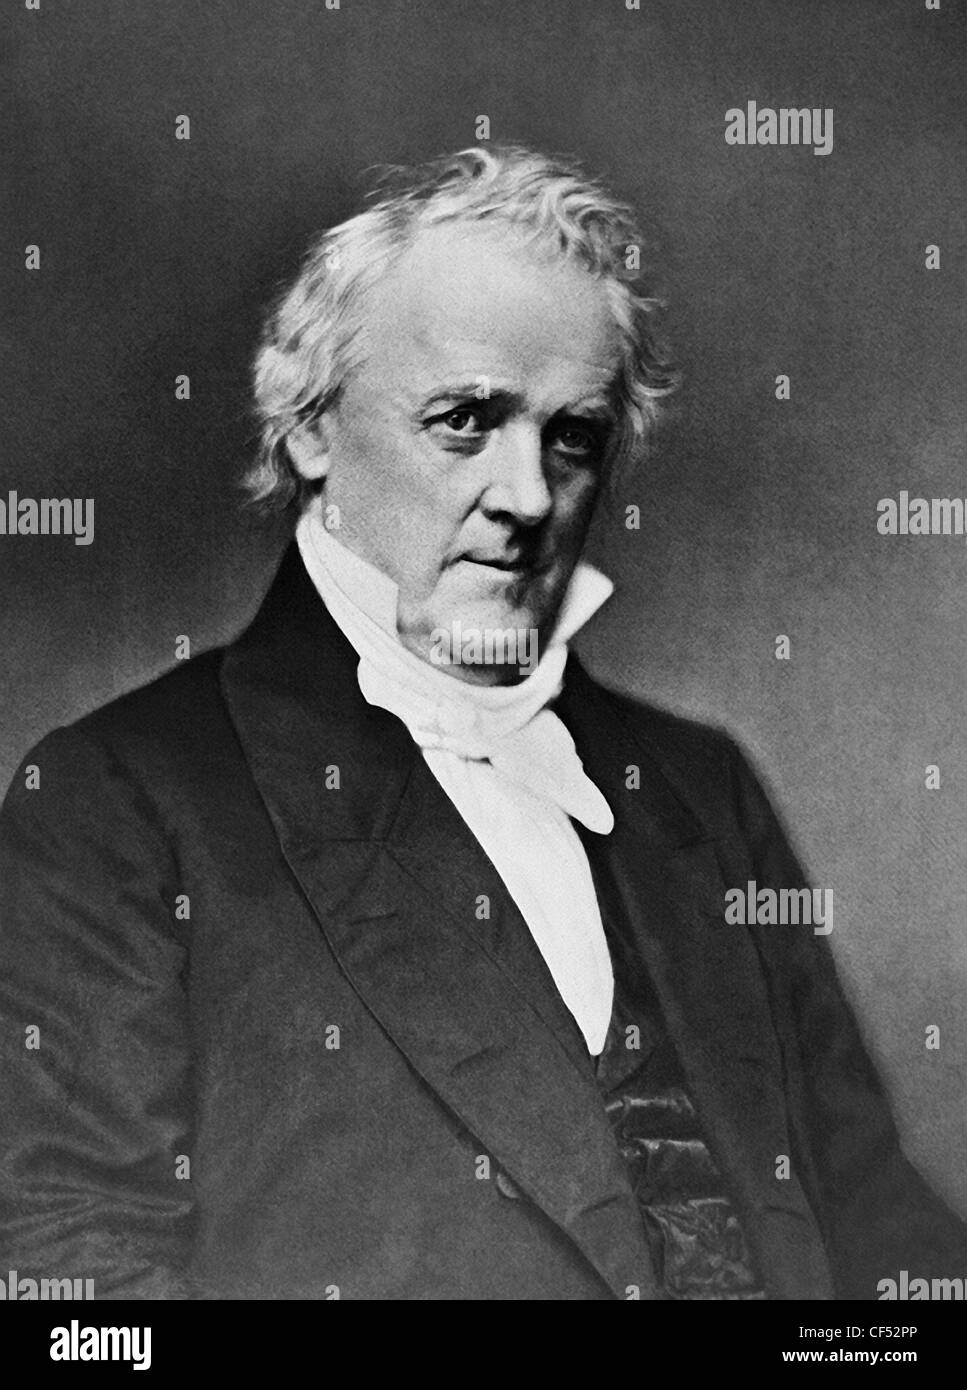 Vintage portrait photo of James Buchanan (1791 – 1868) – the 15th US President (1857 - 1861). Photo circa 1860. Stock Photo